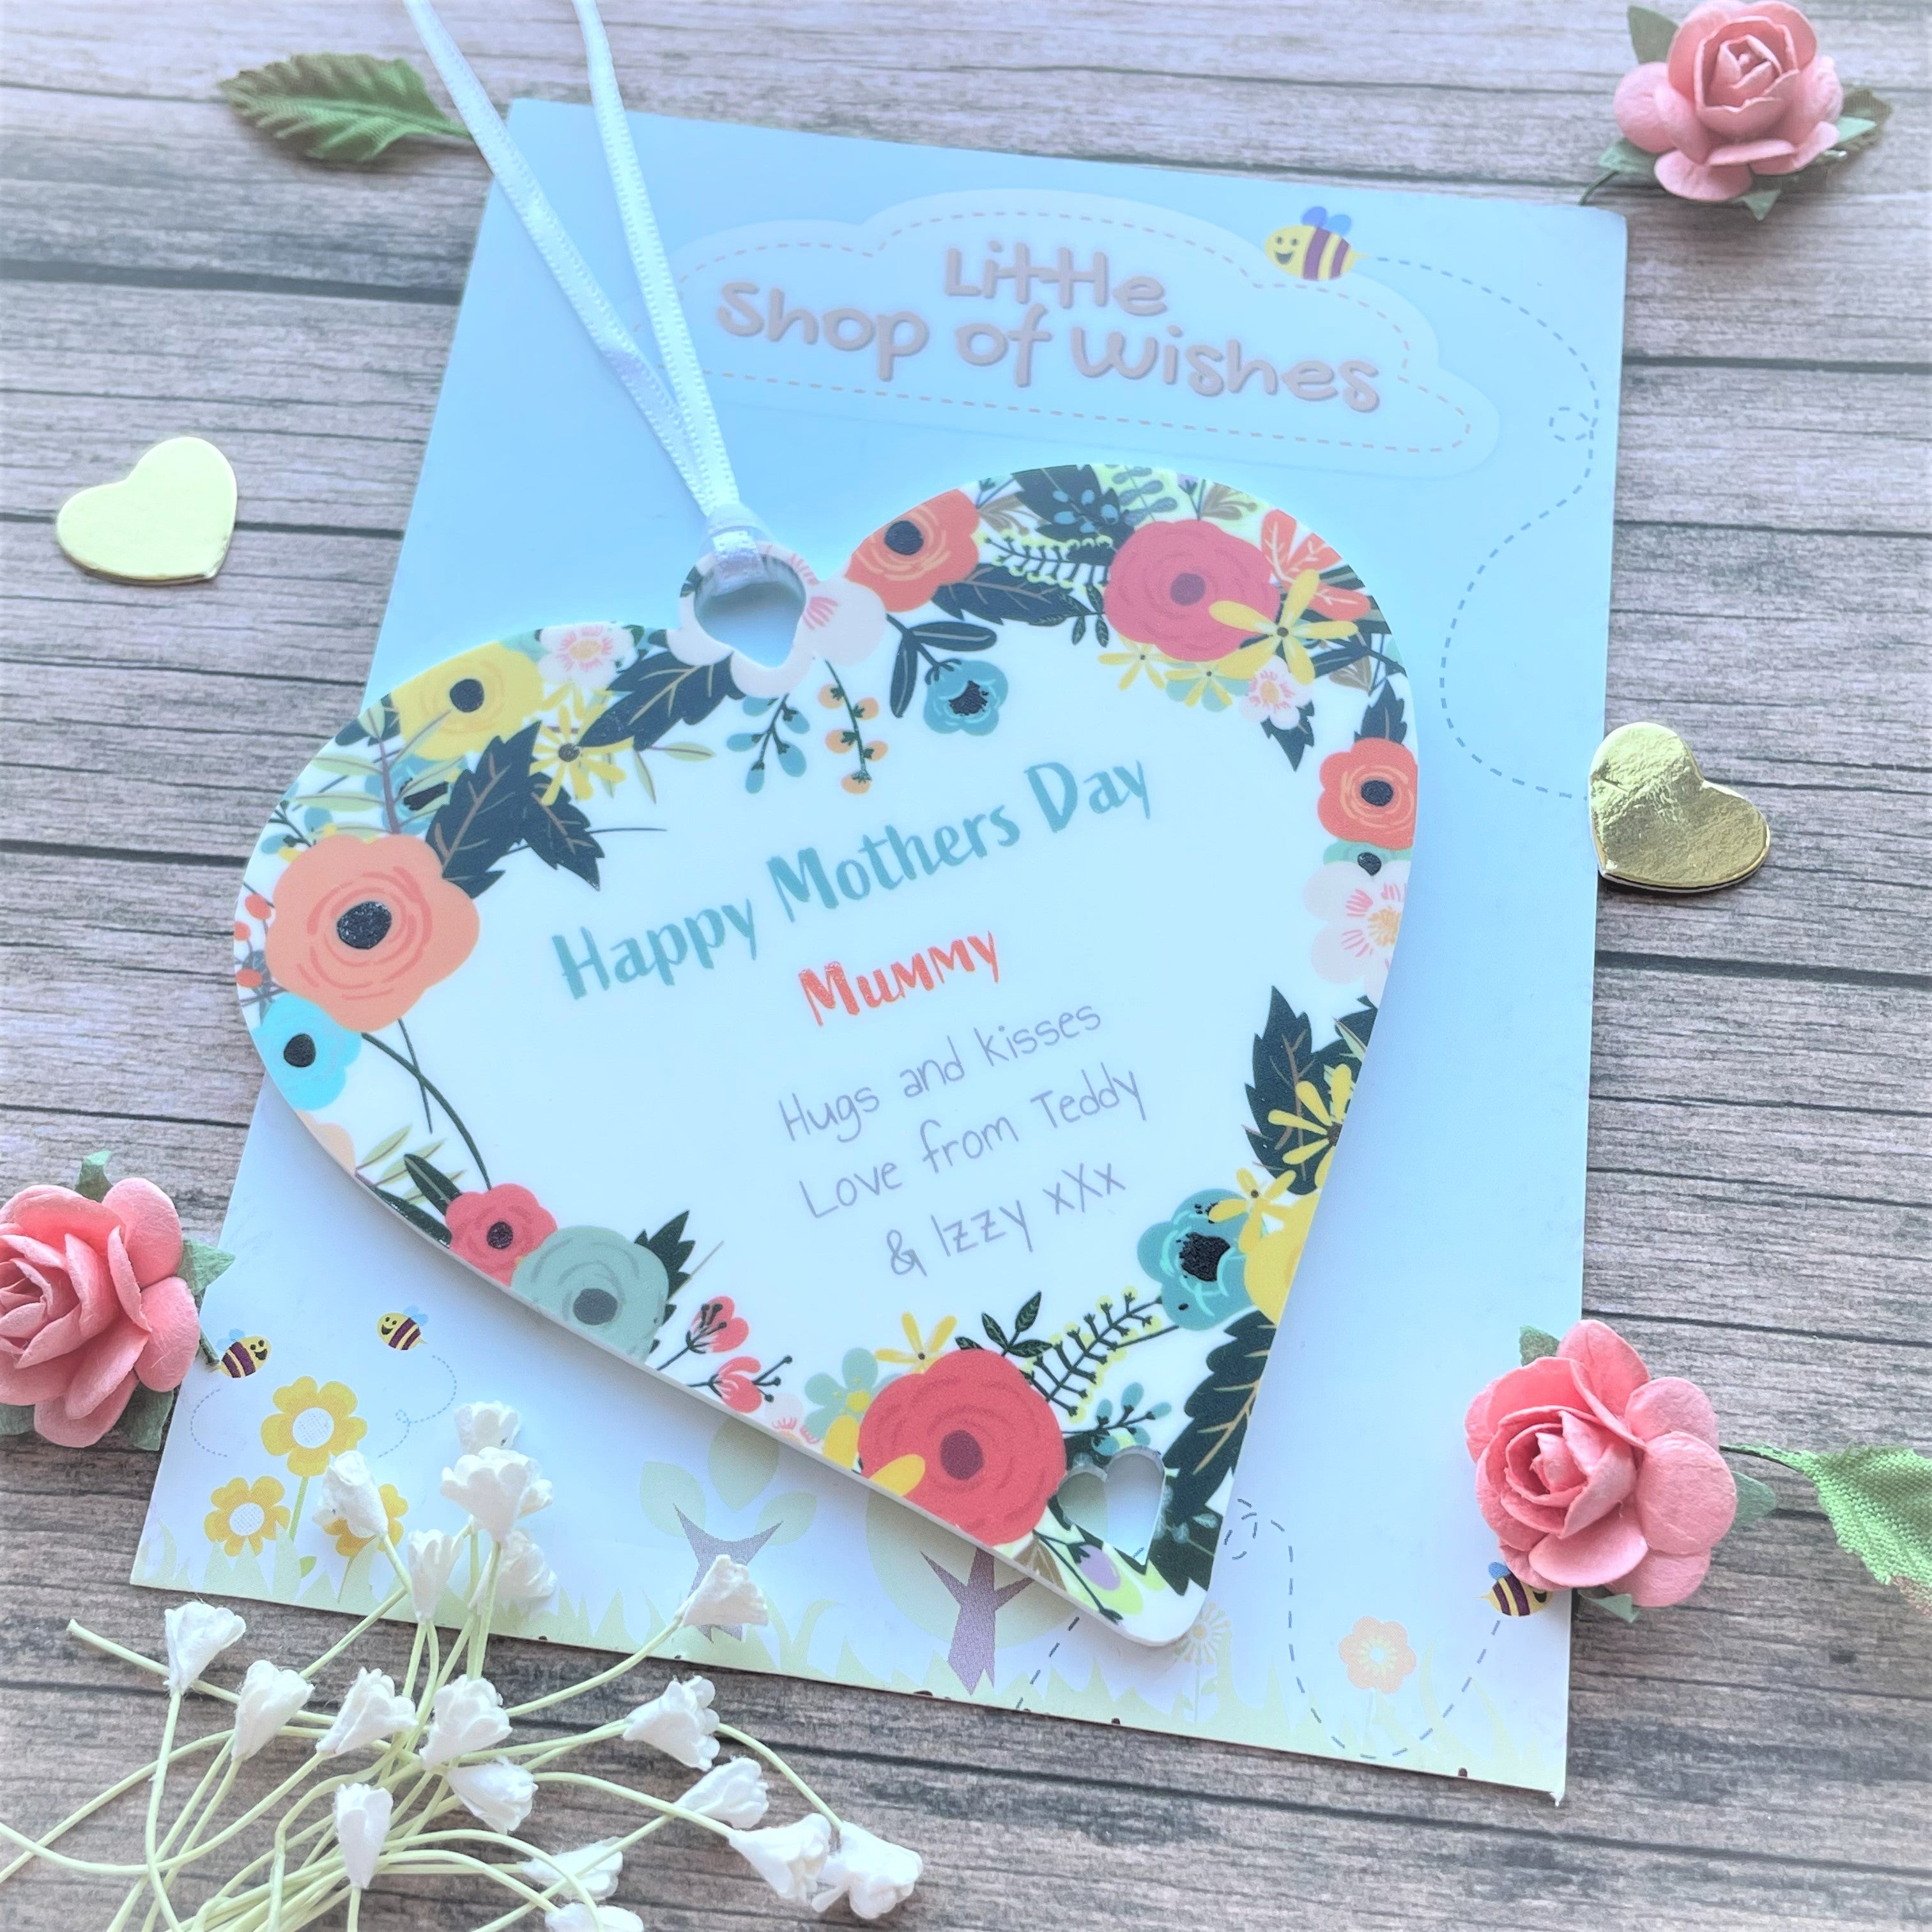 Personalised Bright Flowers Gift for Mum, Grandma, Friend, Wife - 10cm Heart